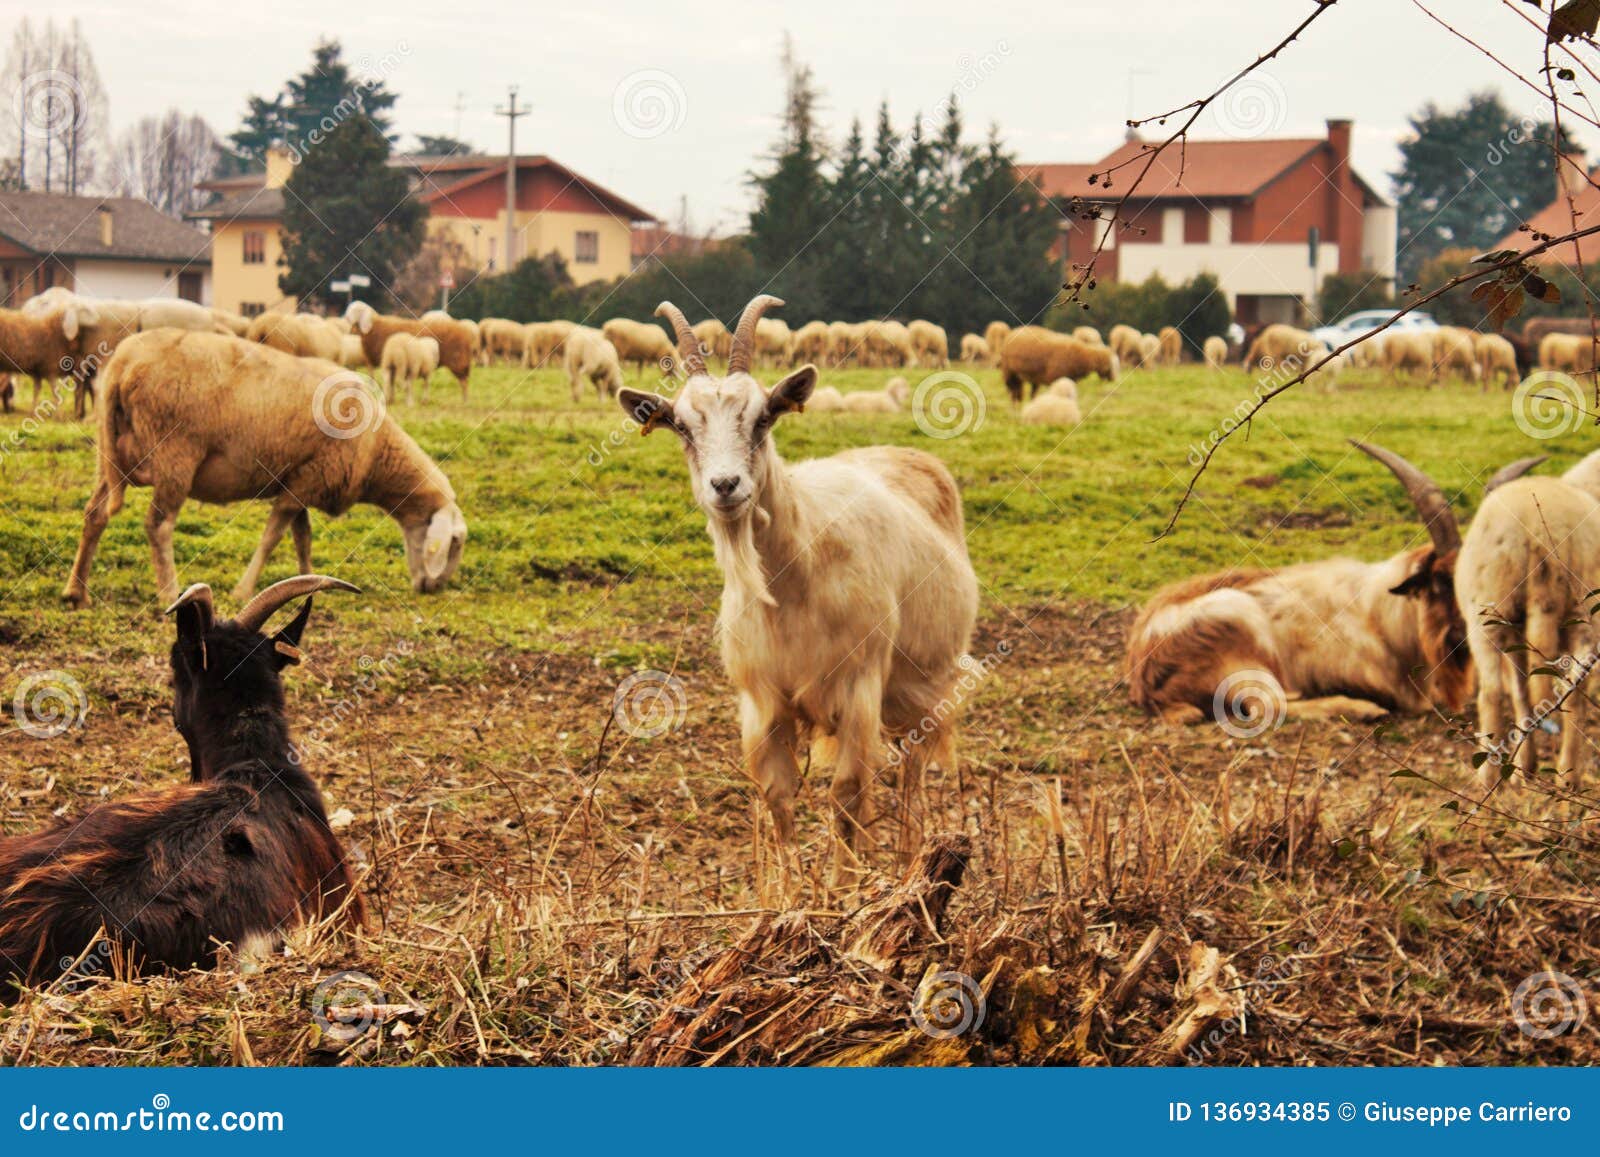 Farm animal, goat. stock image. Image of petspets, farm - 136934385